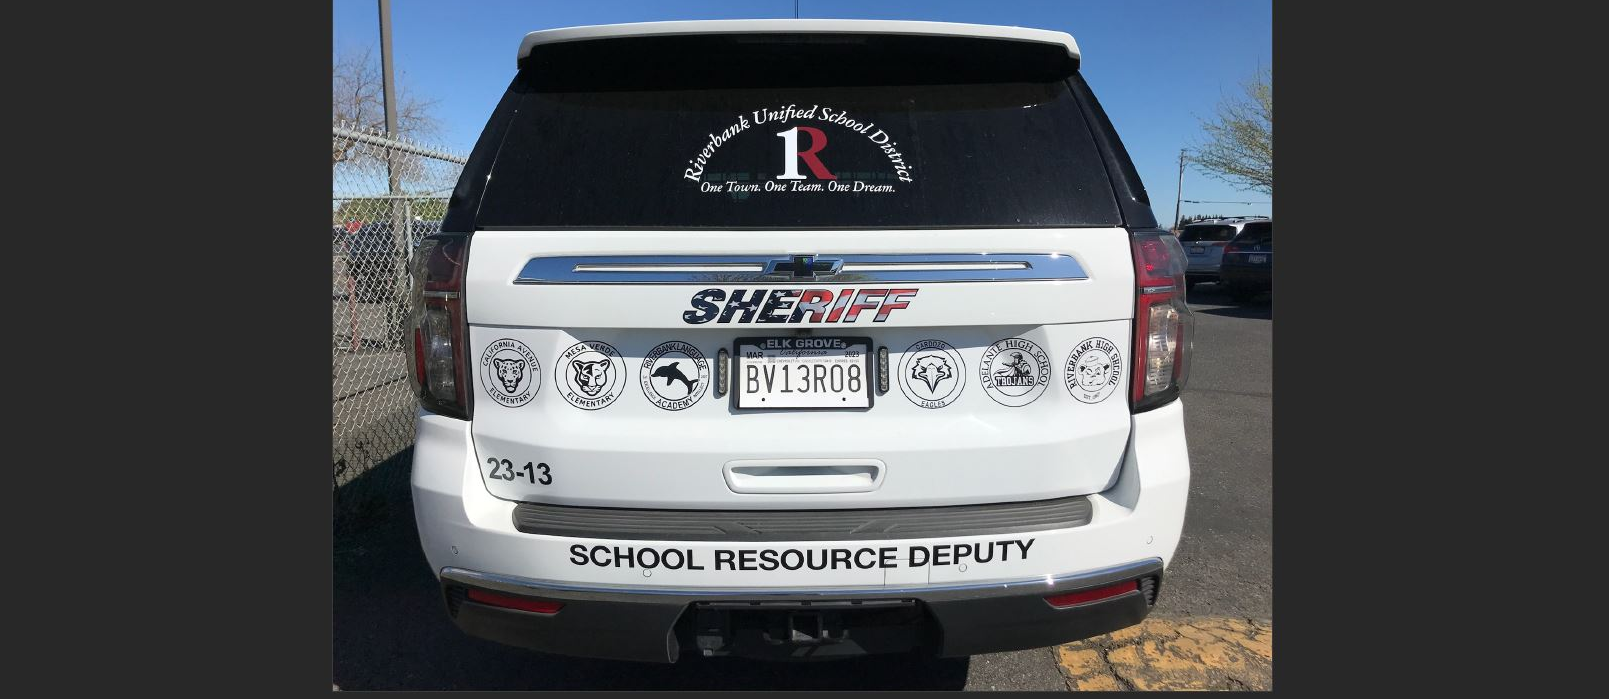 School Resource Officer's vehicle